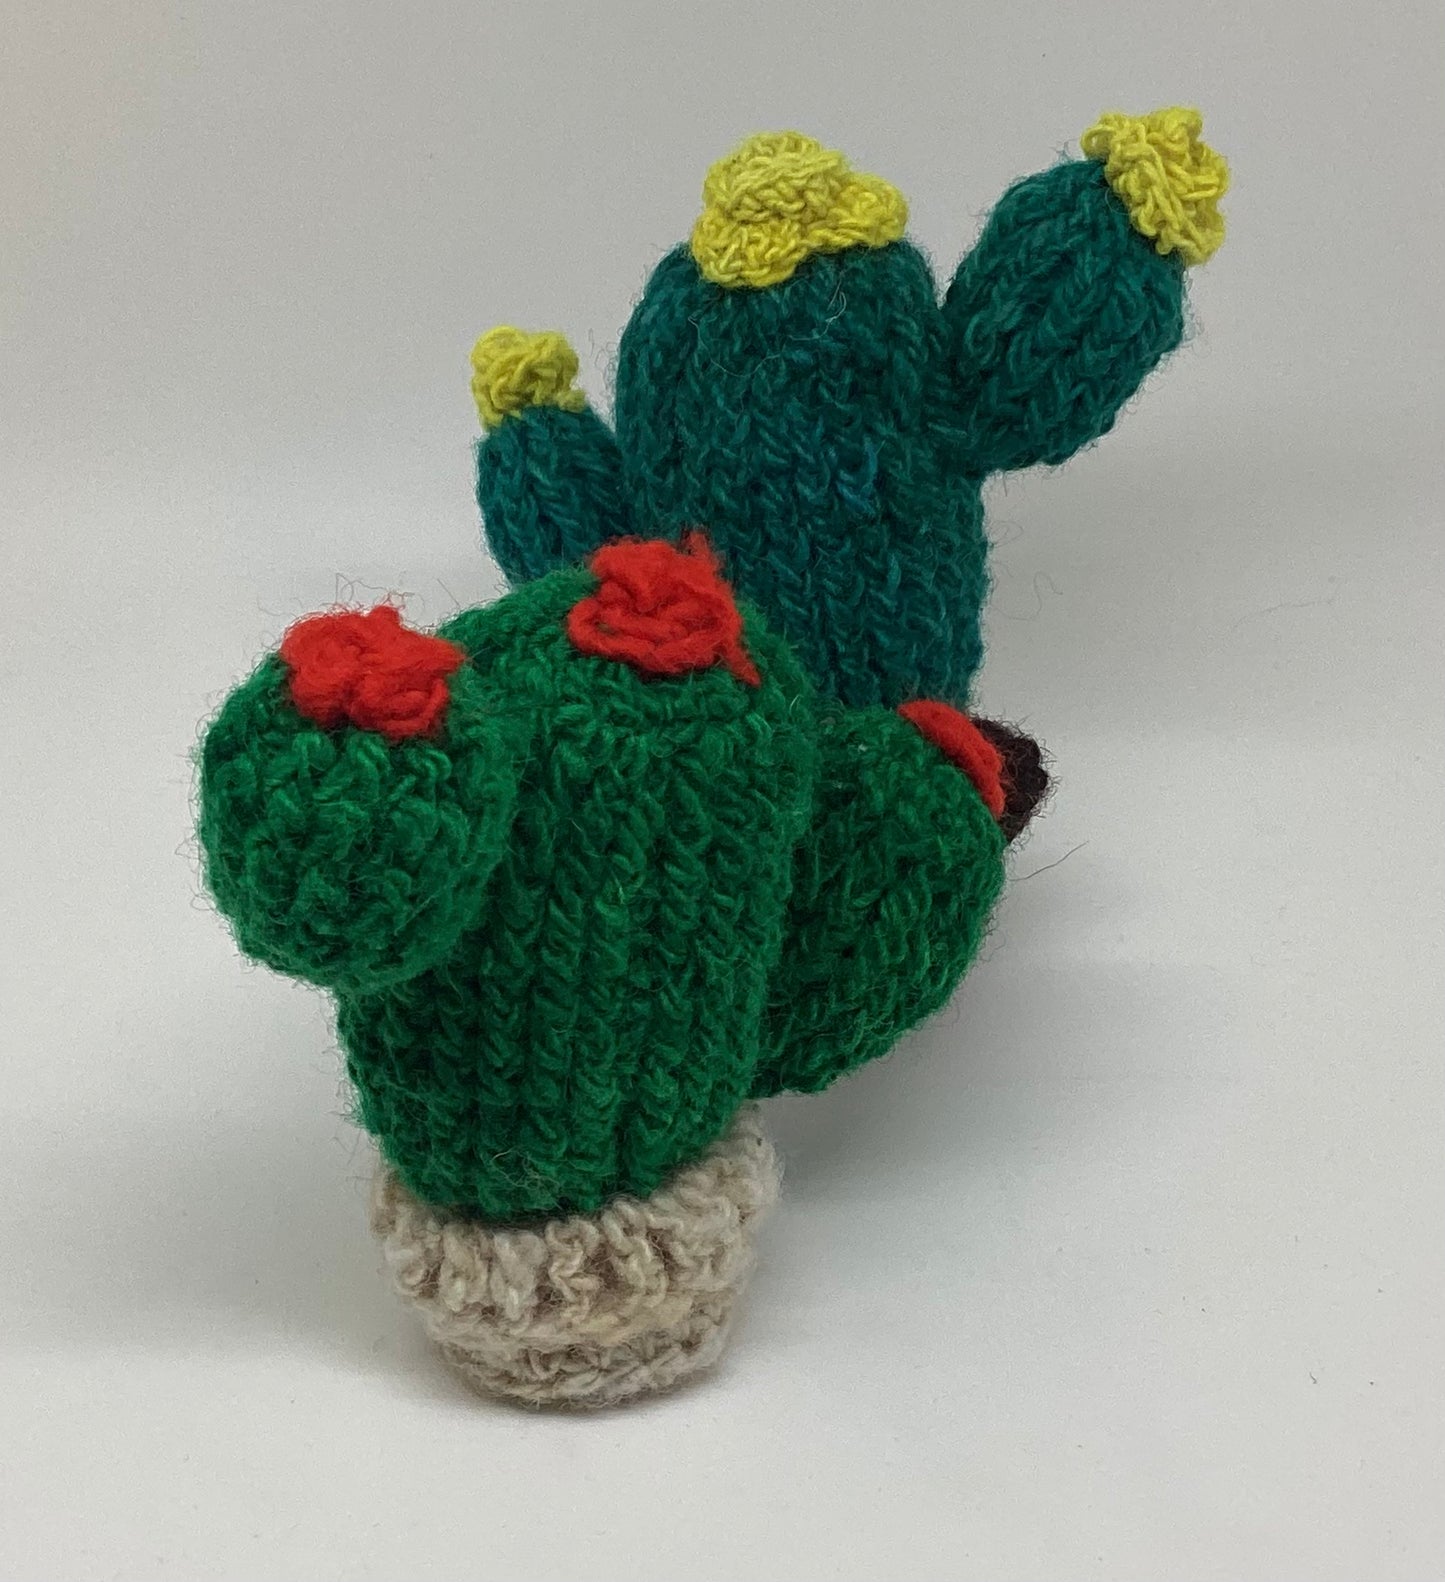 Crochet Cactus